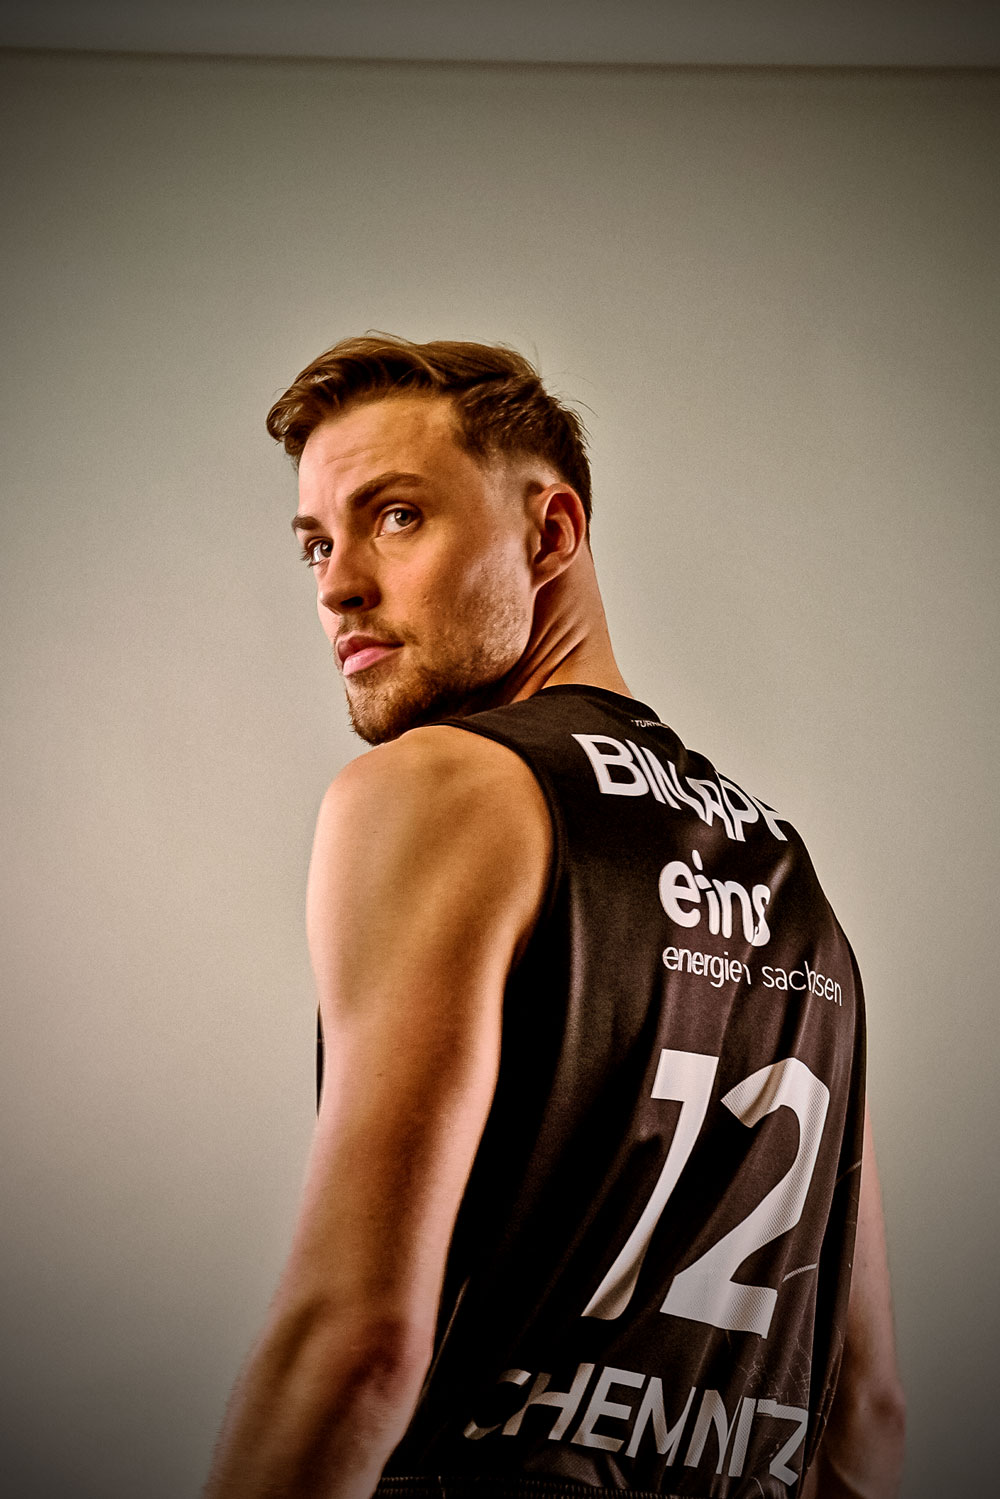 Niners Chemnitz Basketball Spieler Binapfel